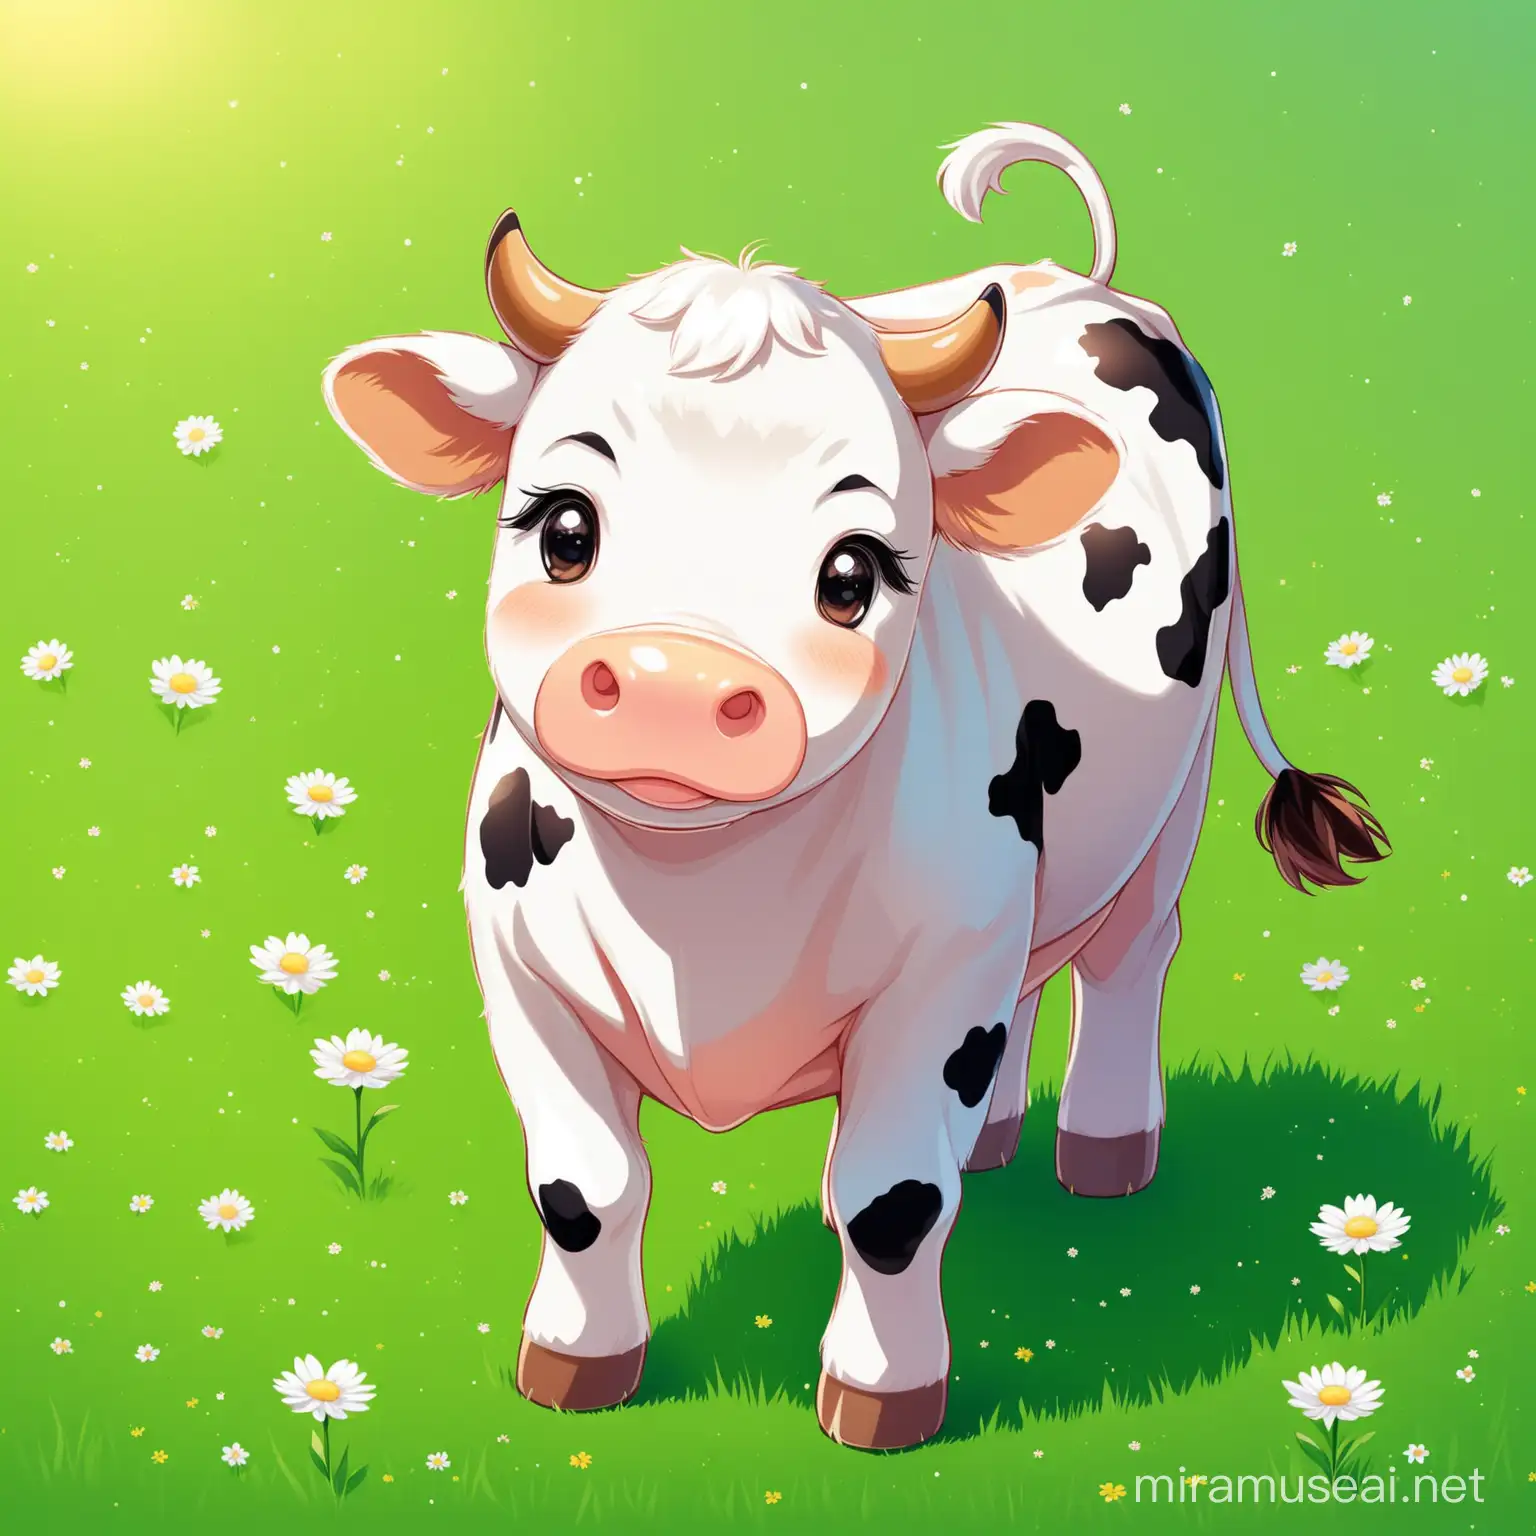 cute cow on green grass
